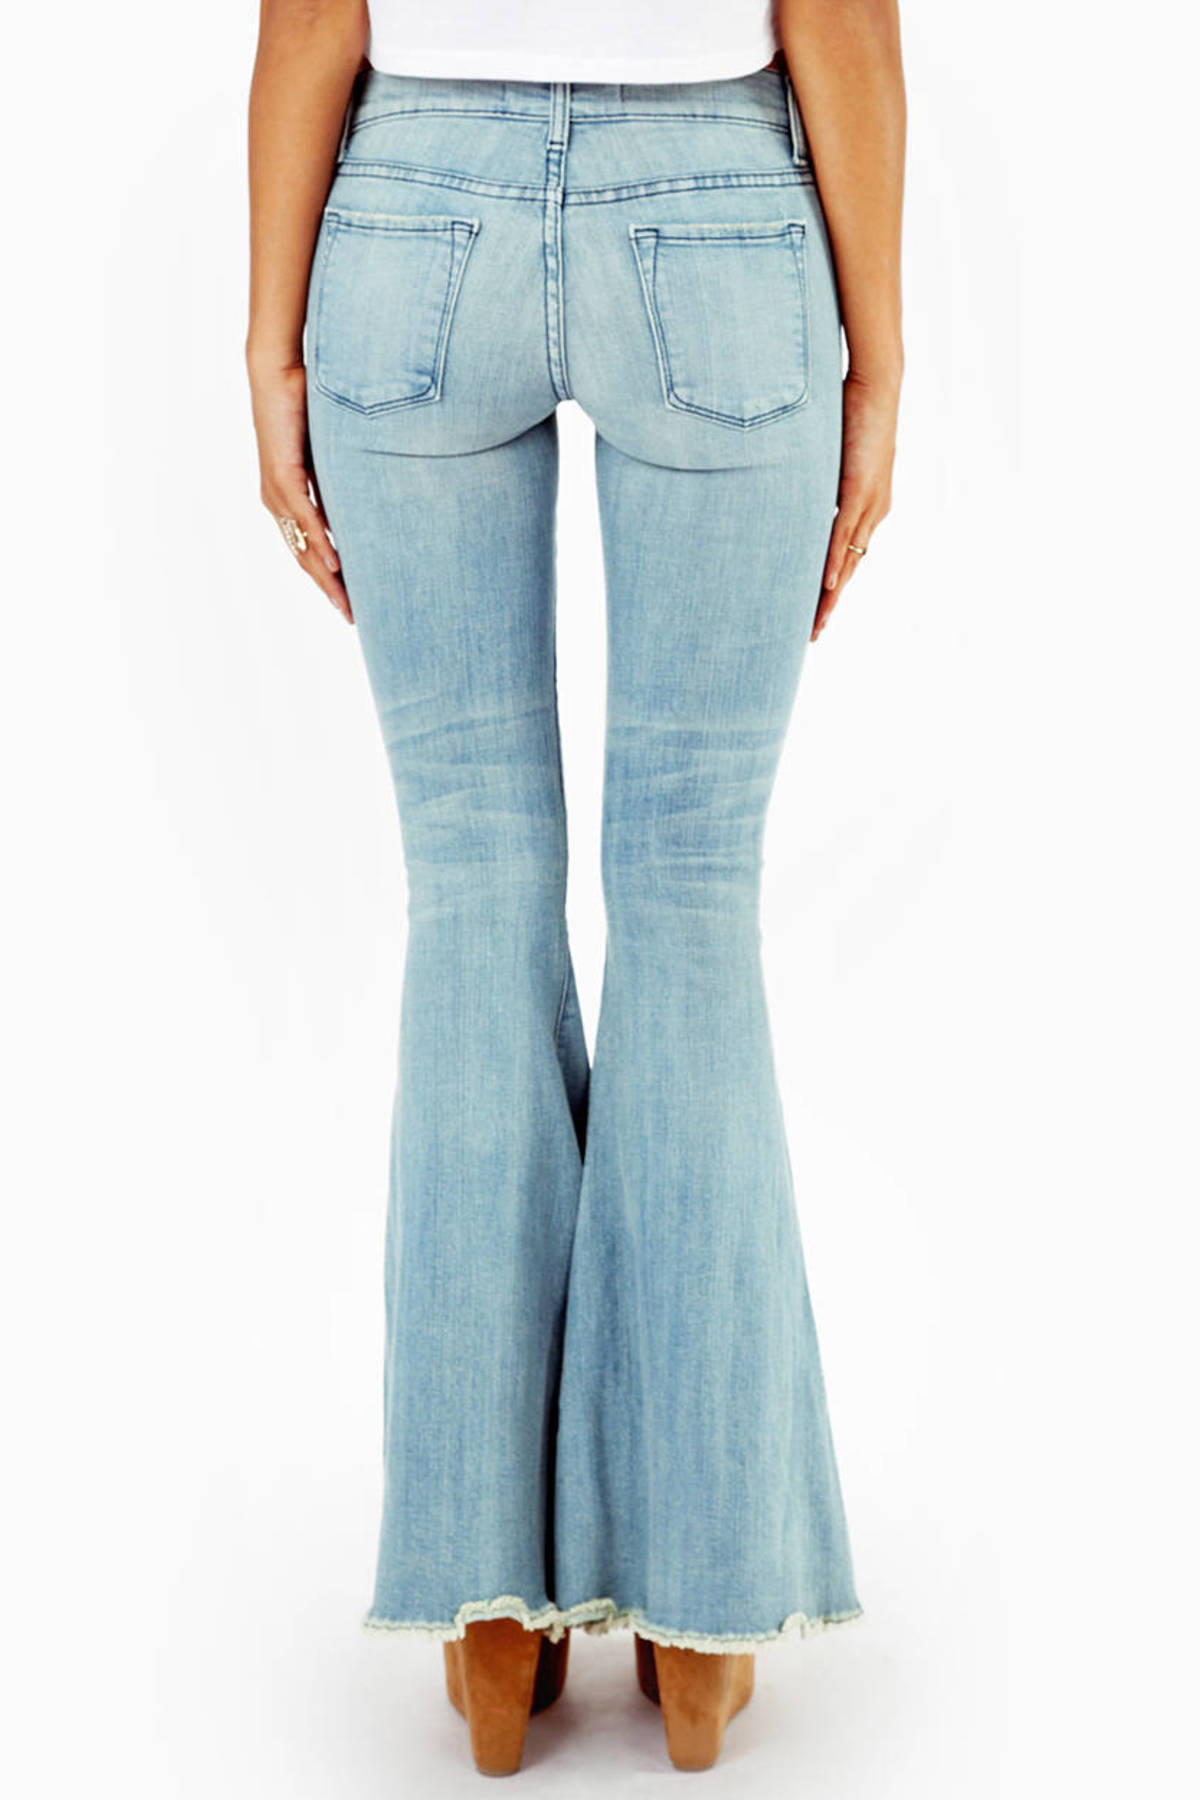 Bopple Flared Denim Jeans in Light Wash - $46 | Tobi US